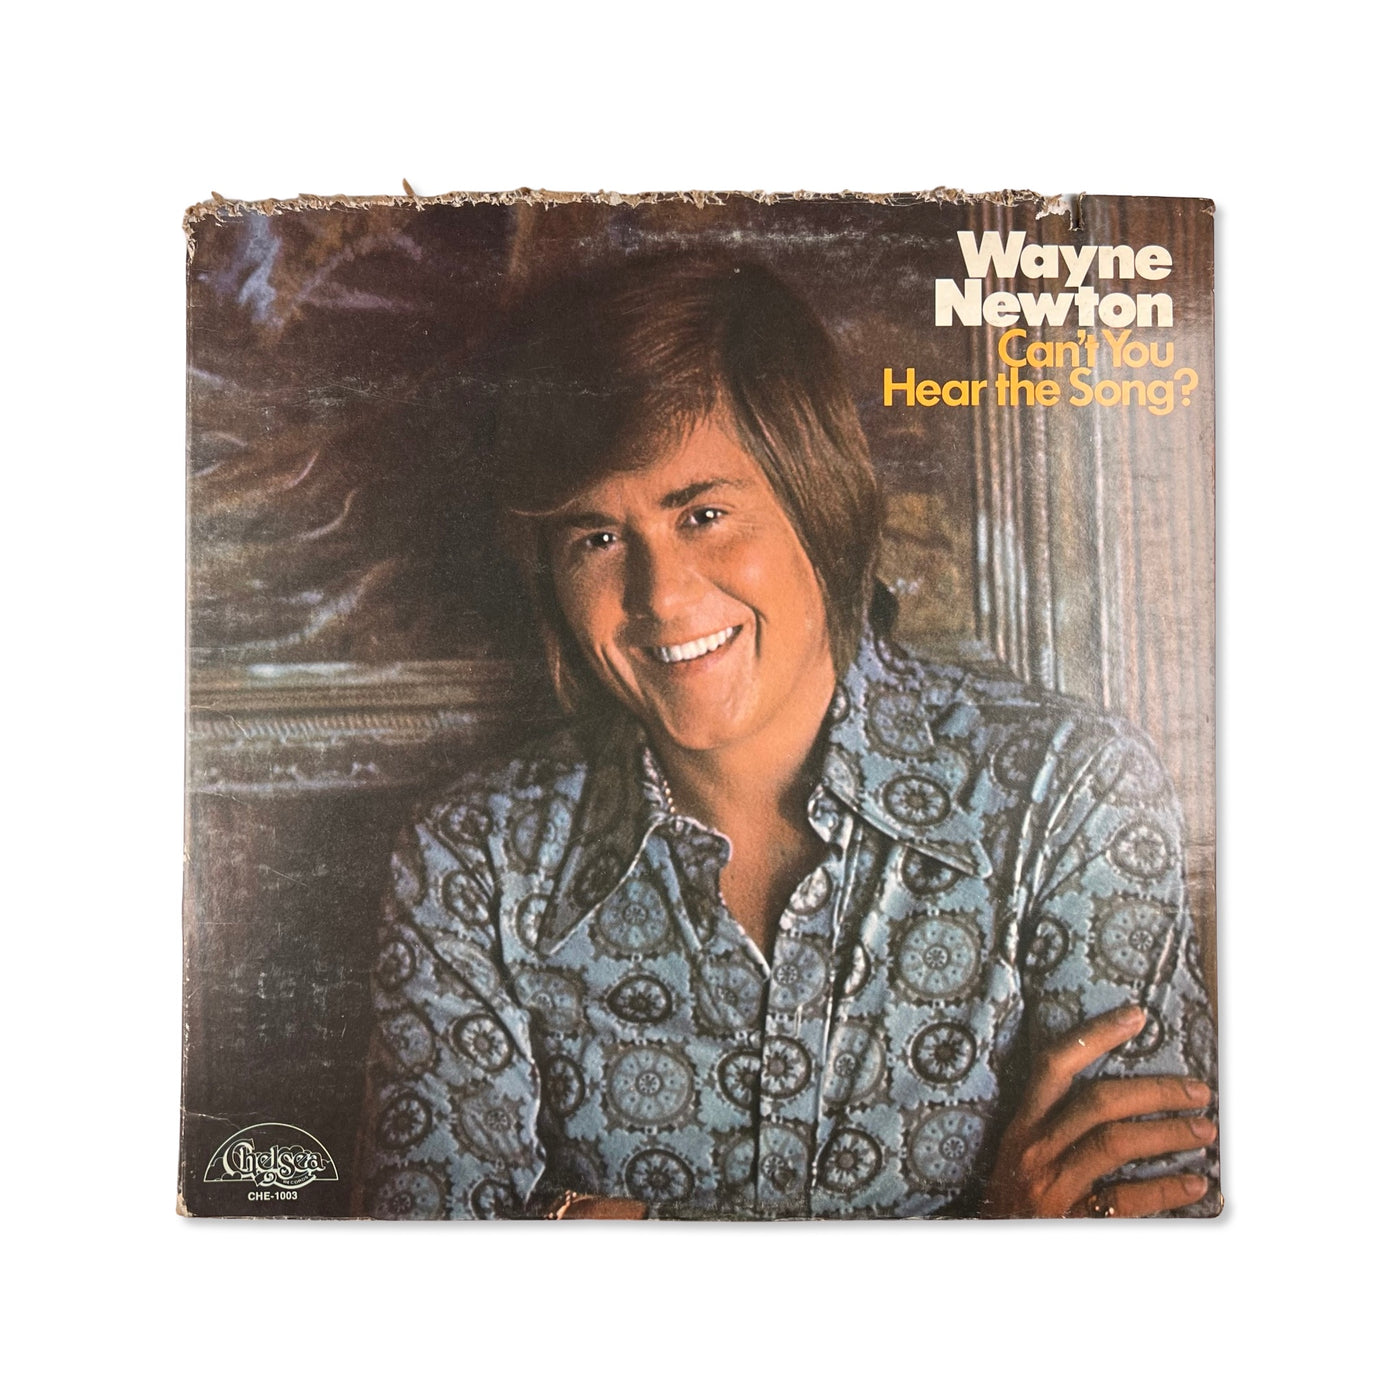 Wayne Newton – Can't You Hear The Song?